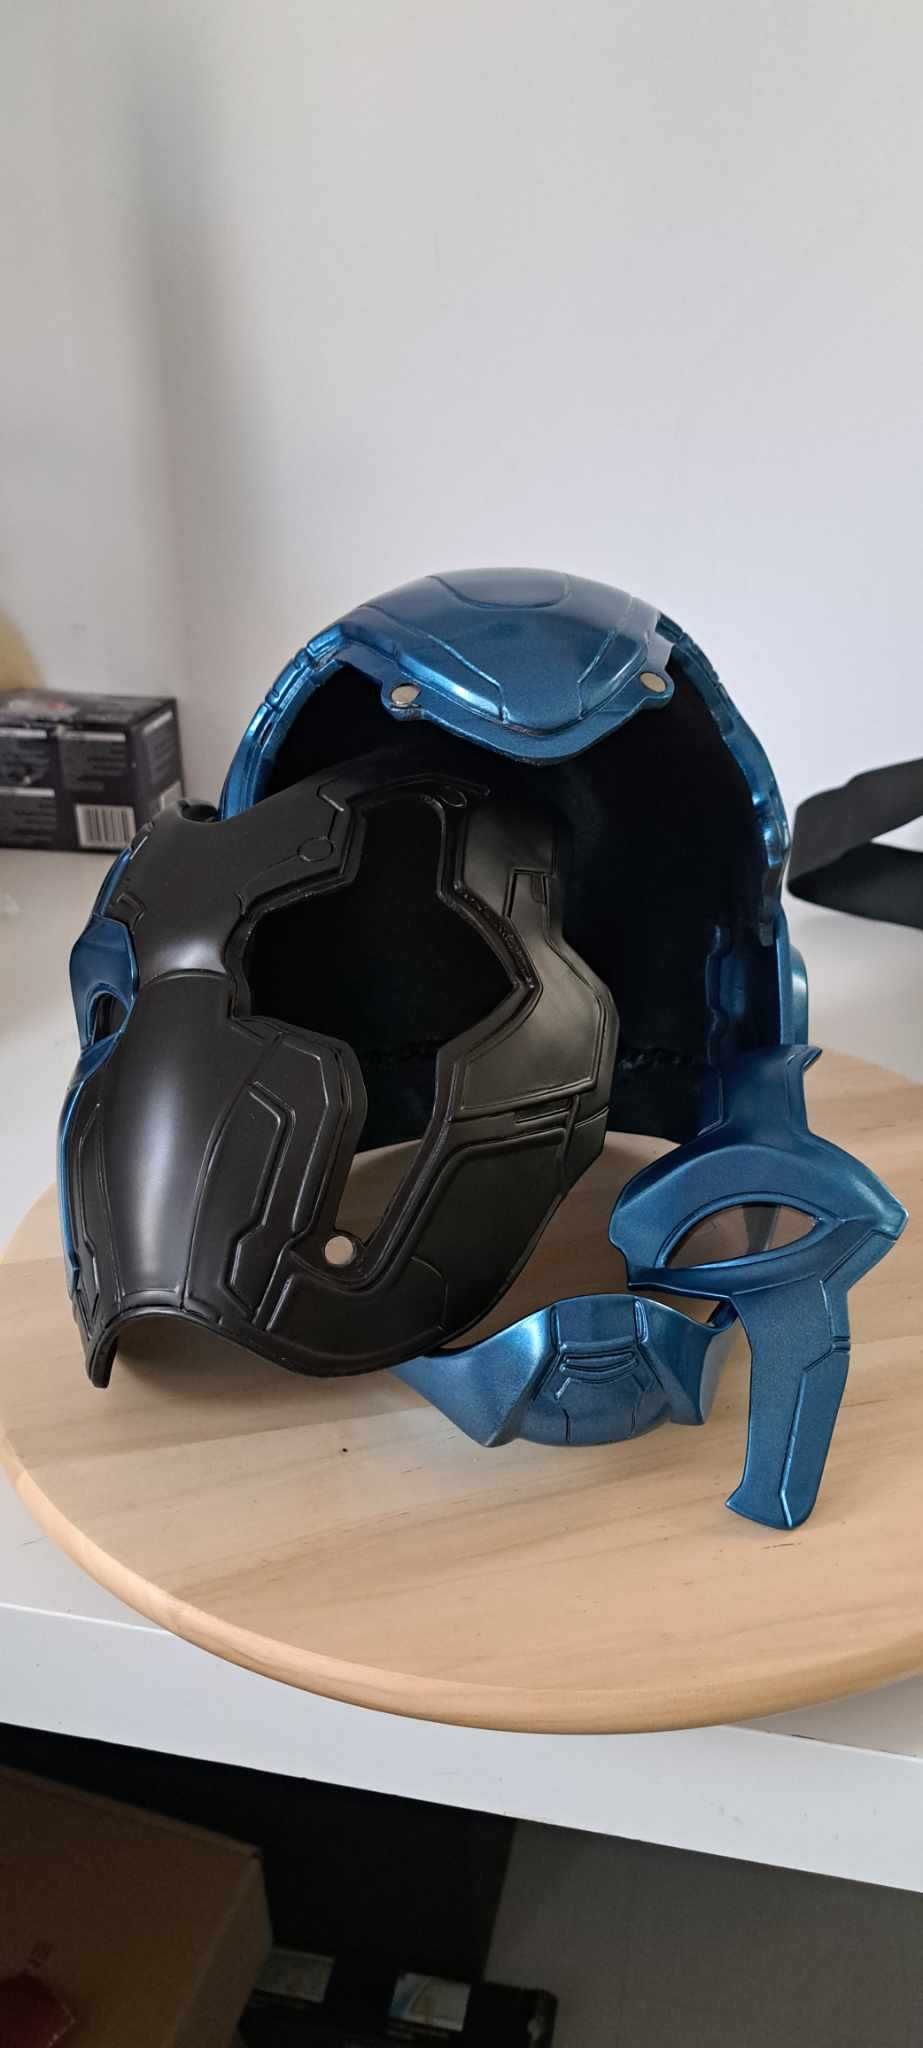 Casca/helmet Blue Beetle 3D print cosplay